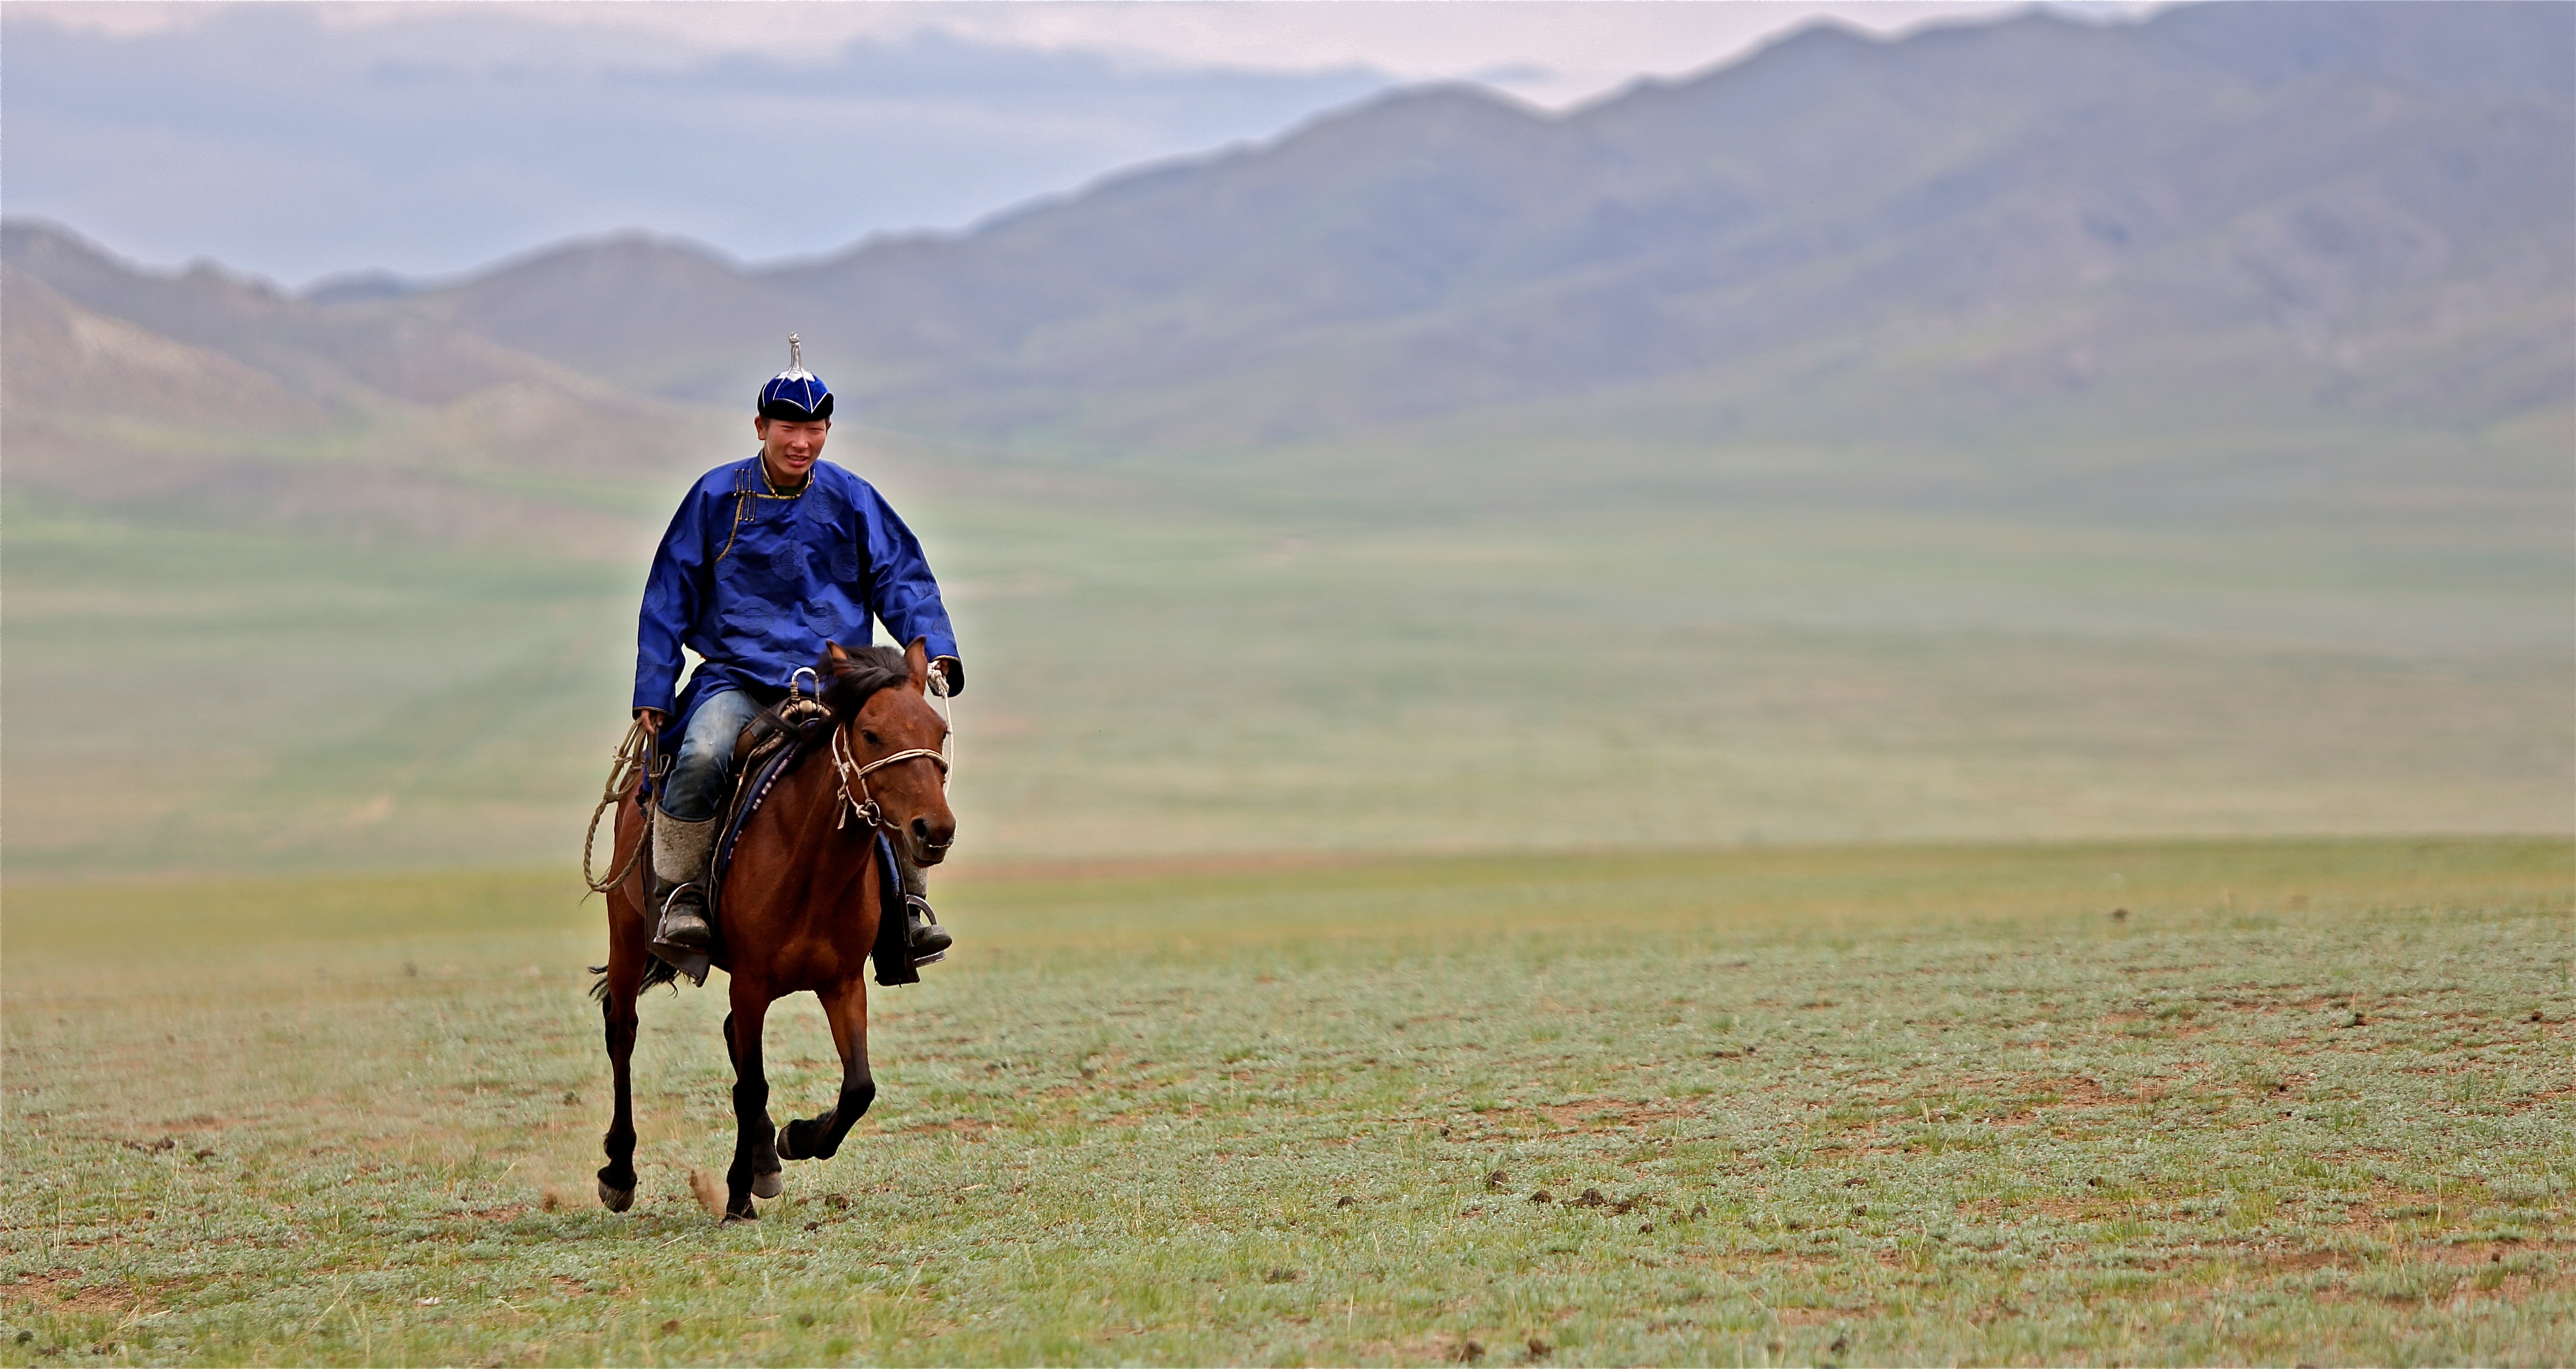 File:Rider in Mongolia, 2012.jpg - Wikimedia Commons